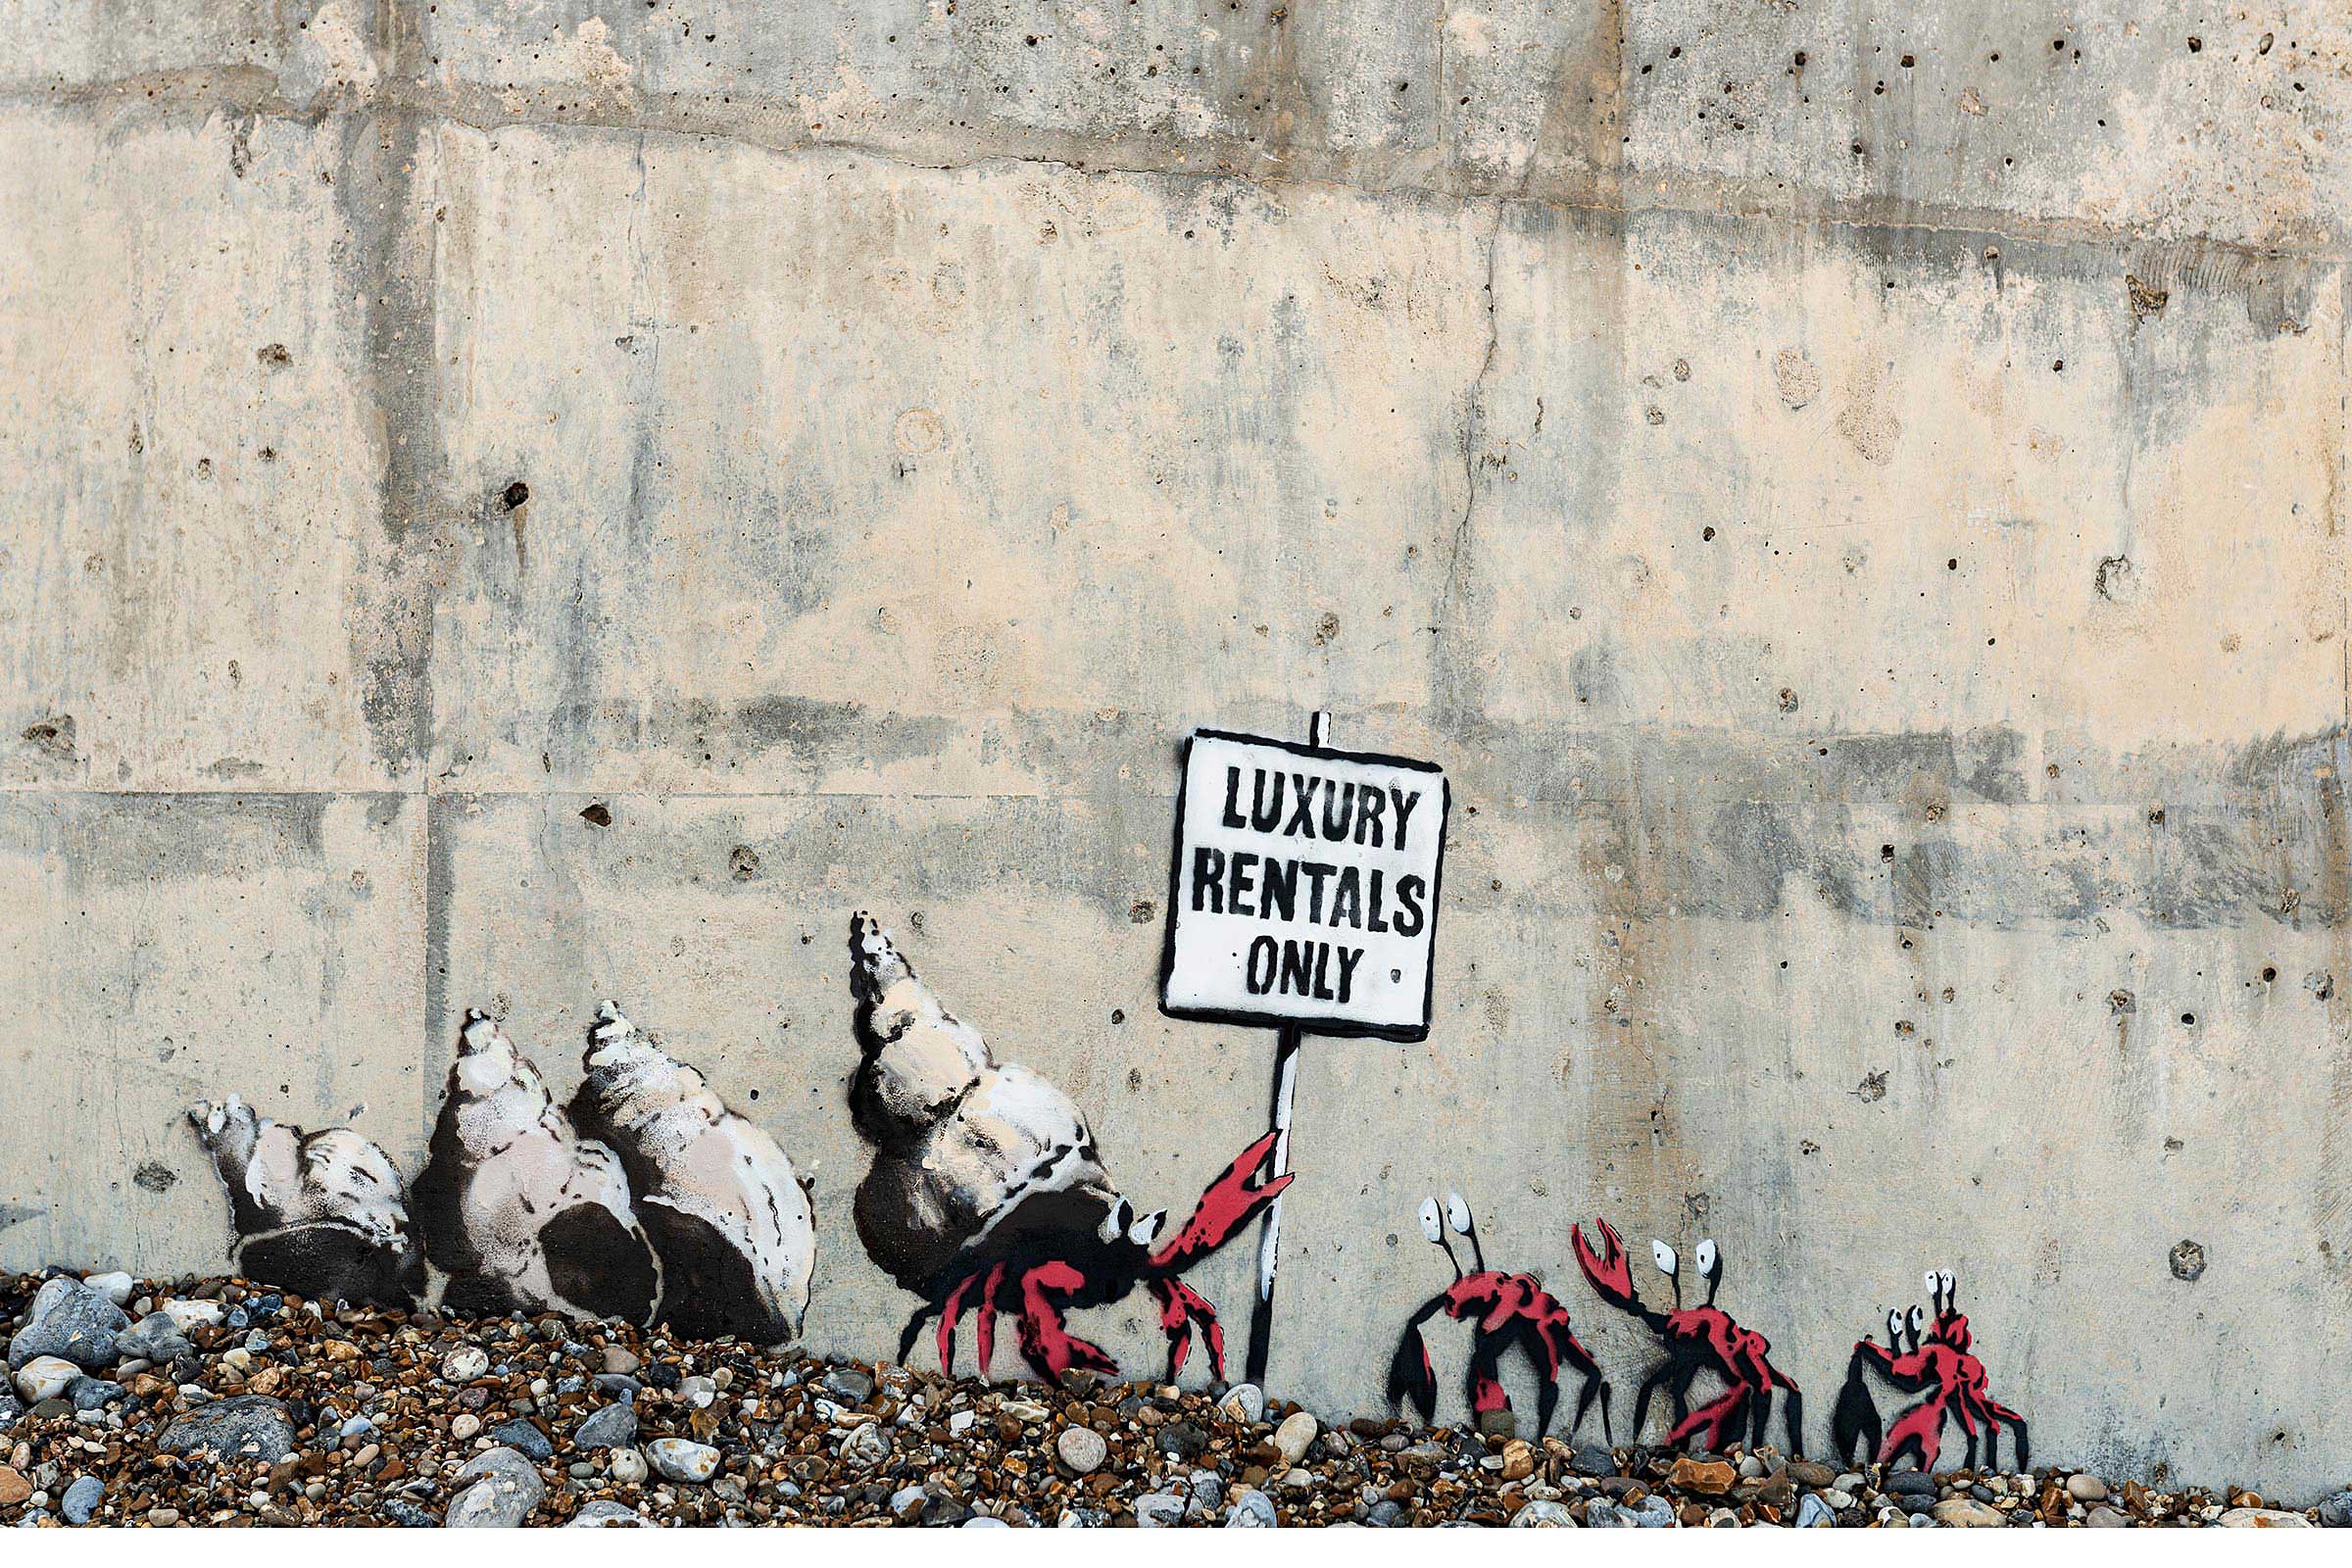 Banksy Graffiti Art in Norfolk Has Been Defaced: Why So?